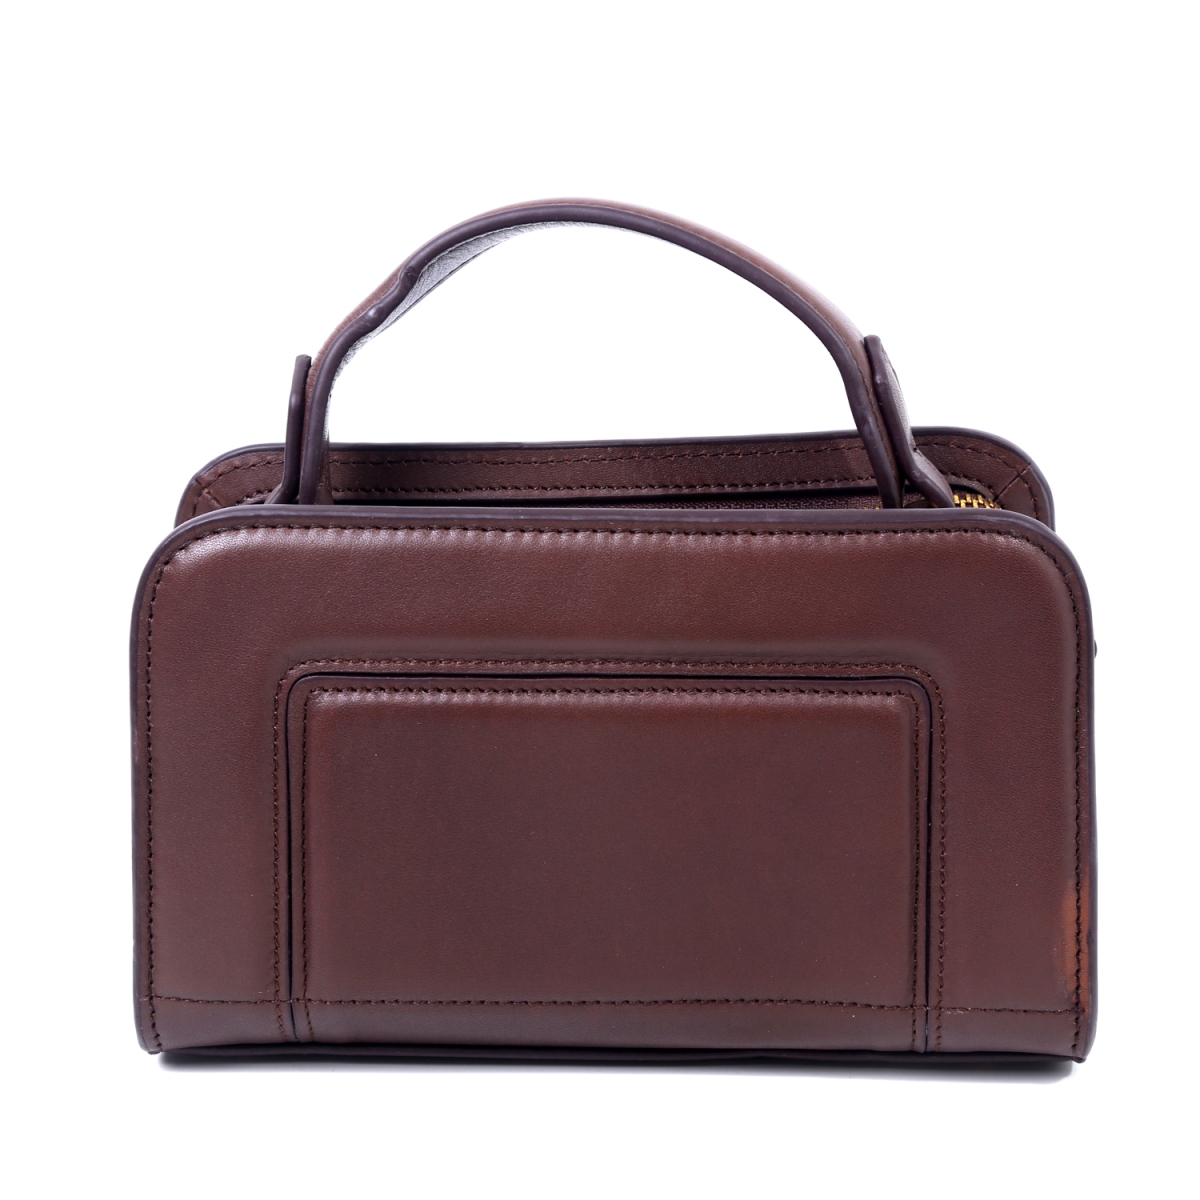 Fe8001-brown Genuine Leather Ashley Satchel - Brown